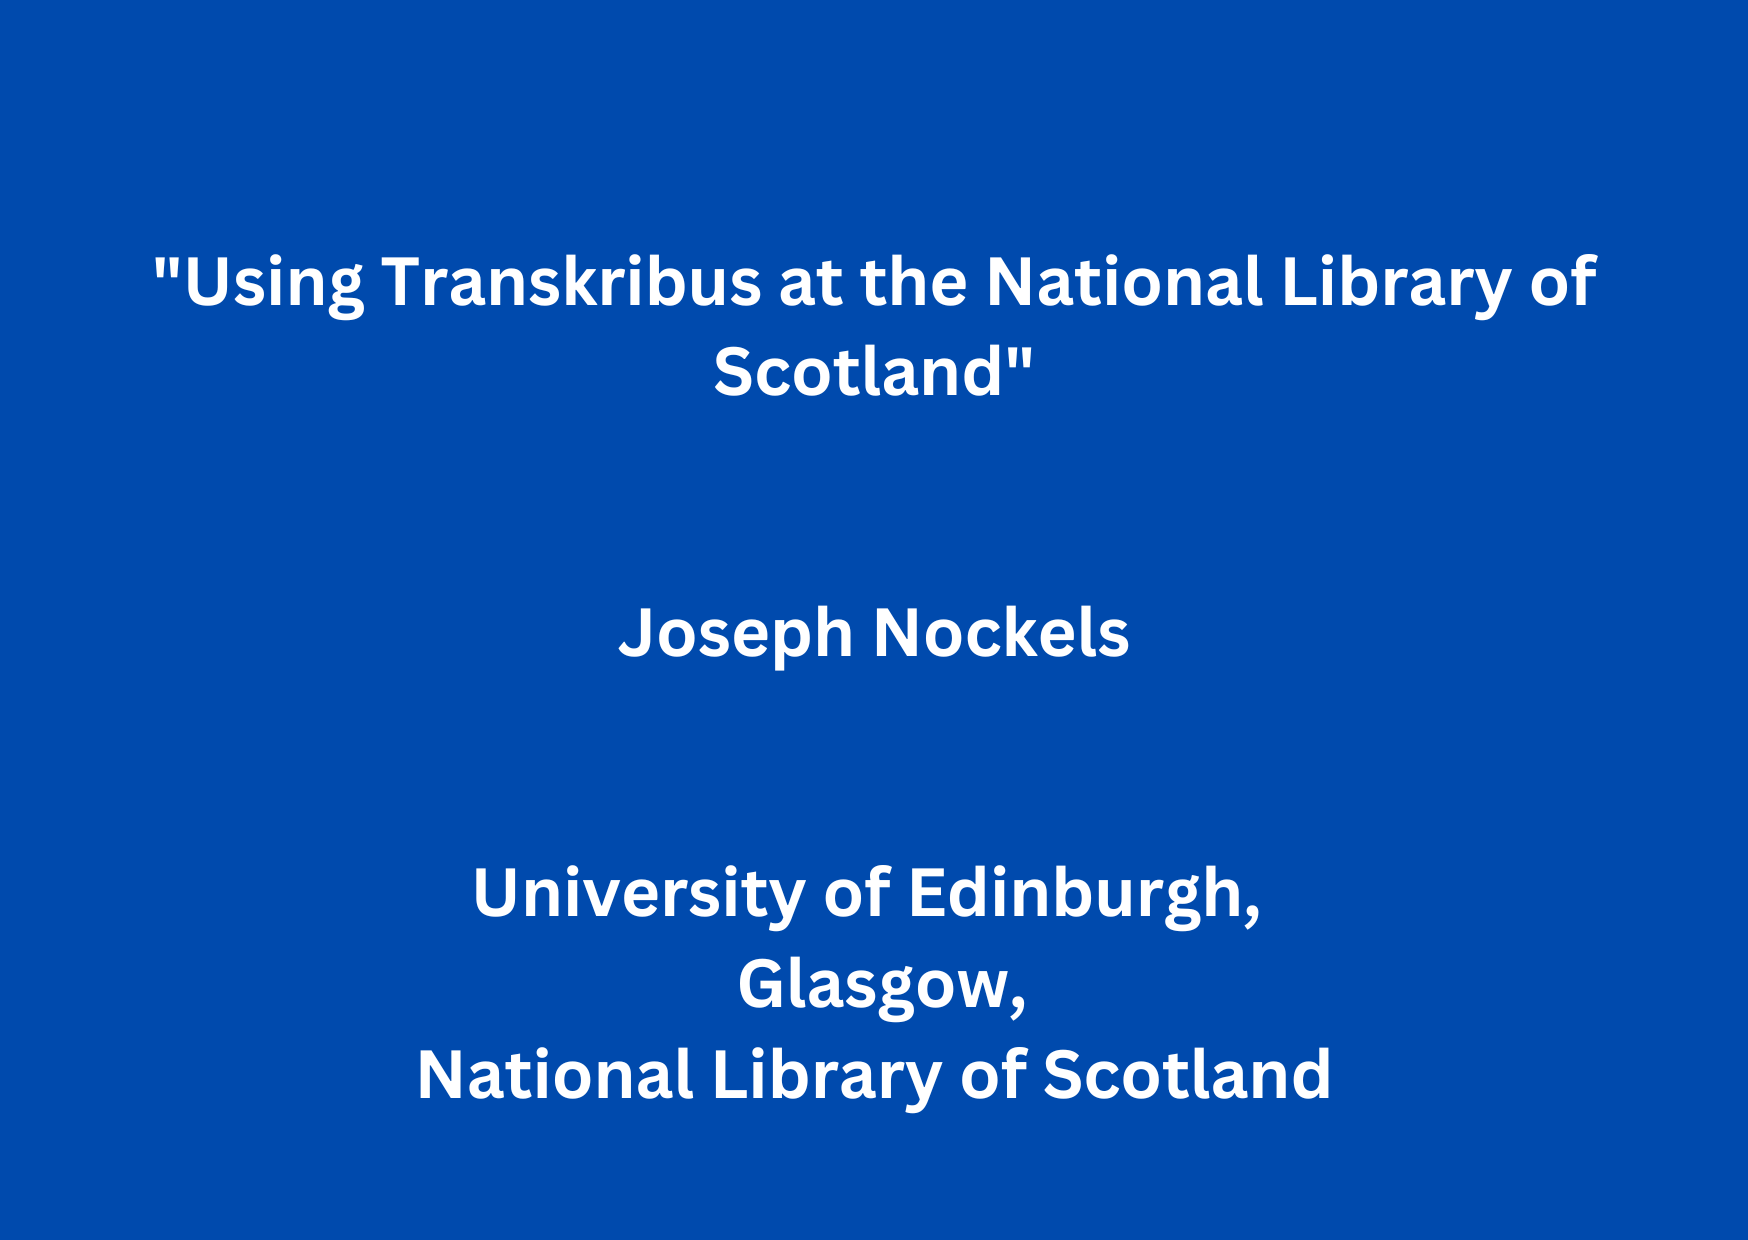 AEOLIAN Workshop 6: “Using Transkribus at the National Library of Scotland” by Joseph Nockels